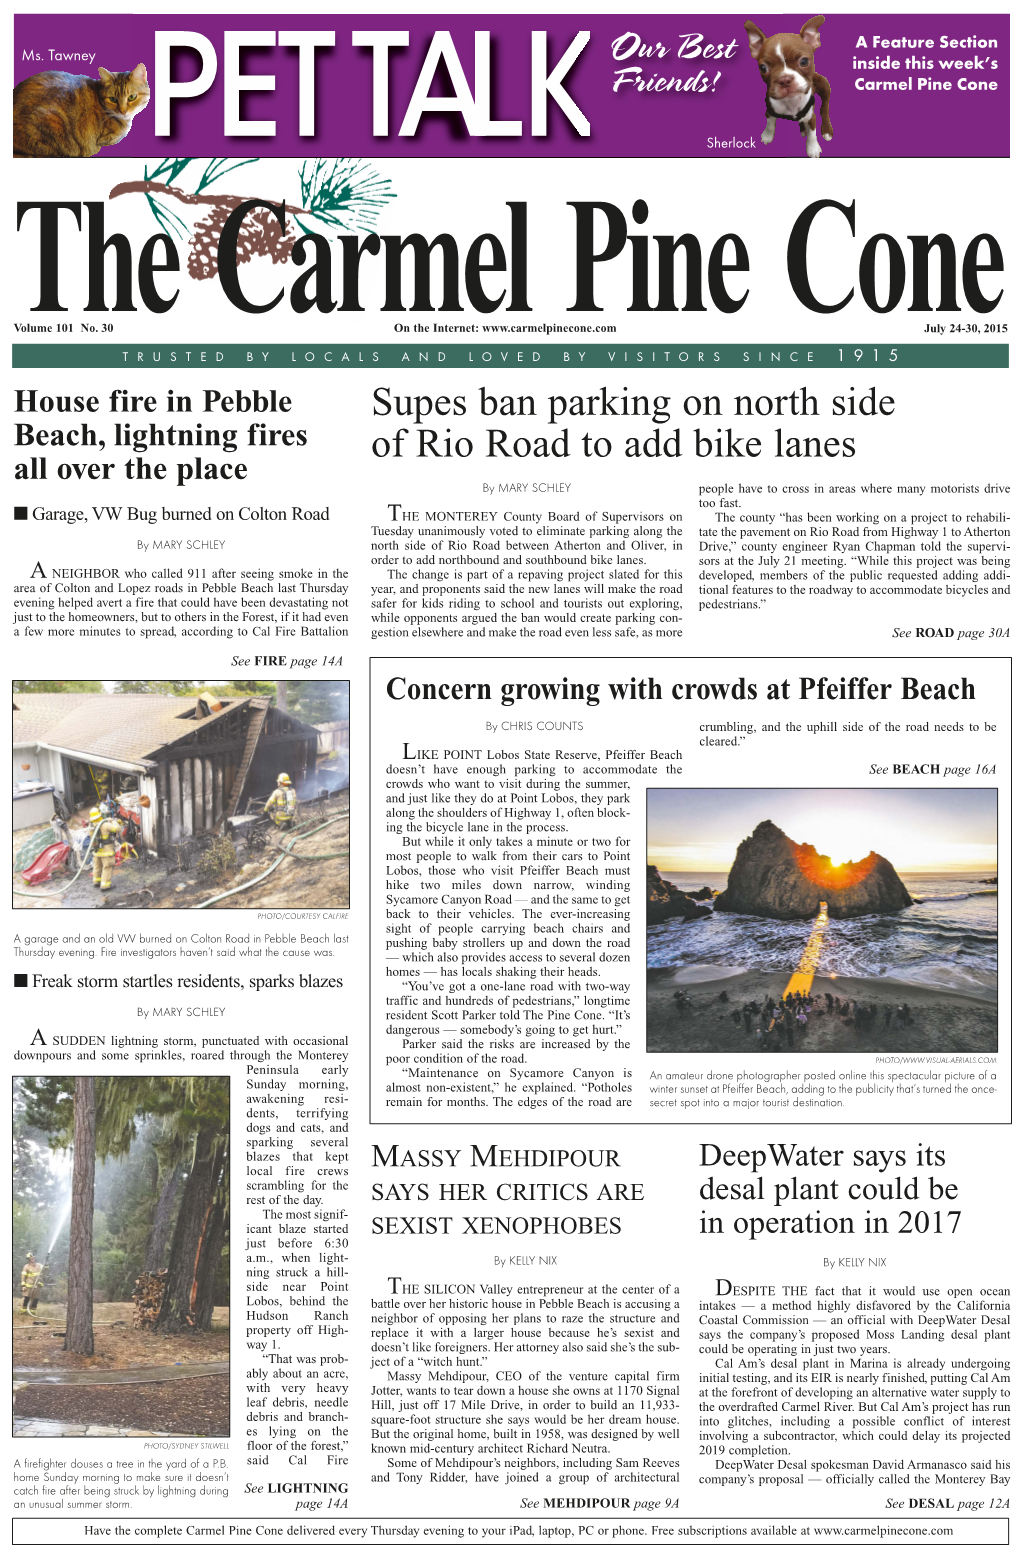 Carmel Pine Cone, July 24, 2015 (Main News)